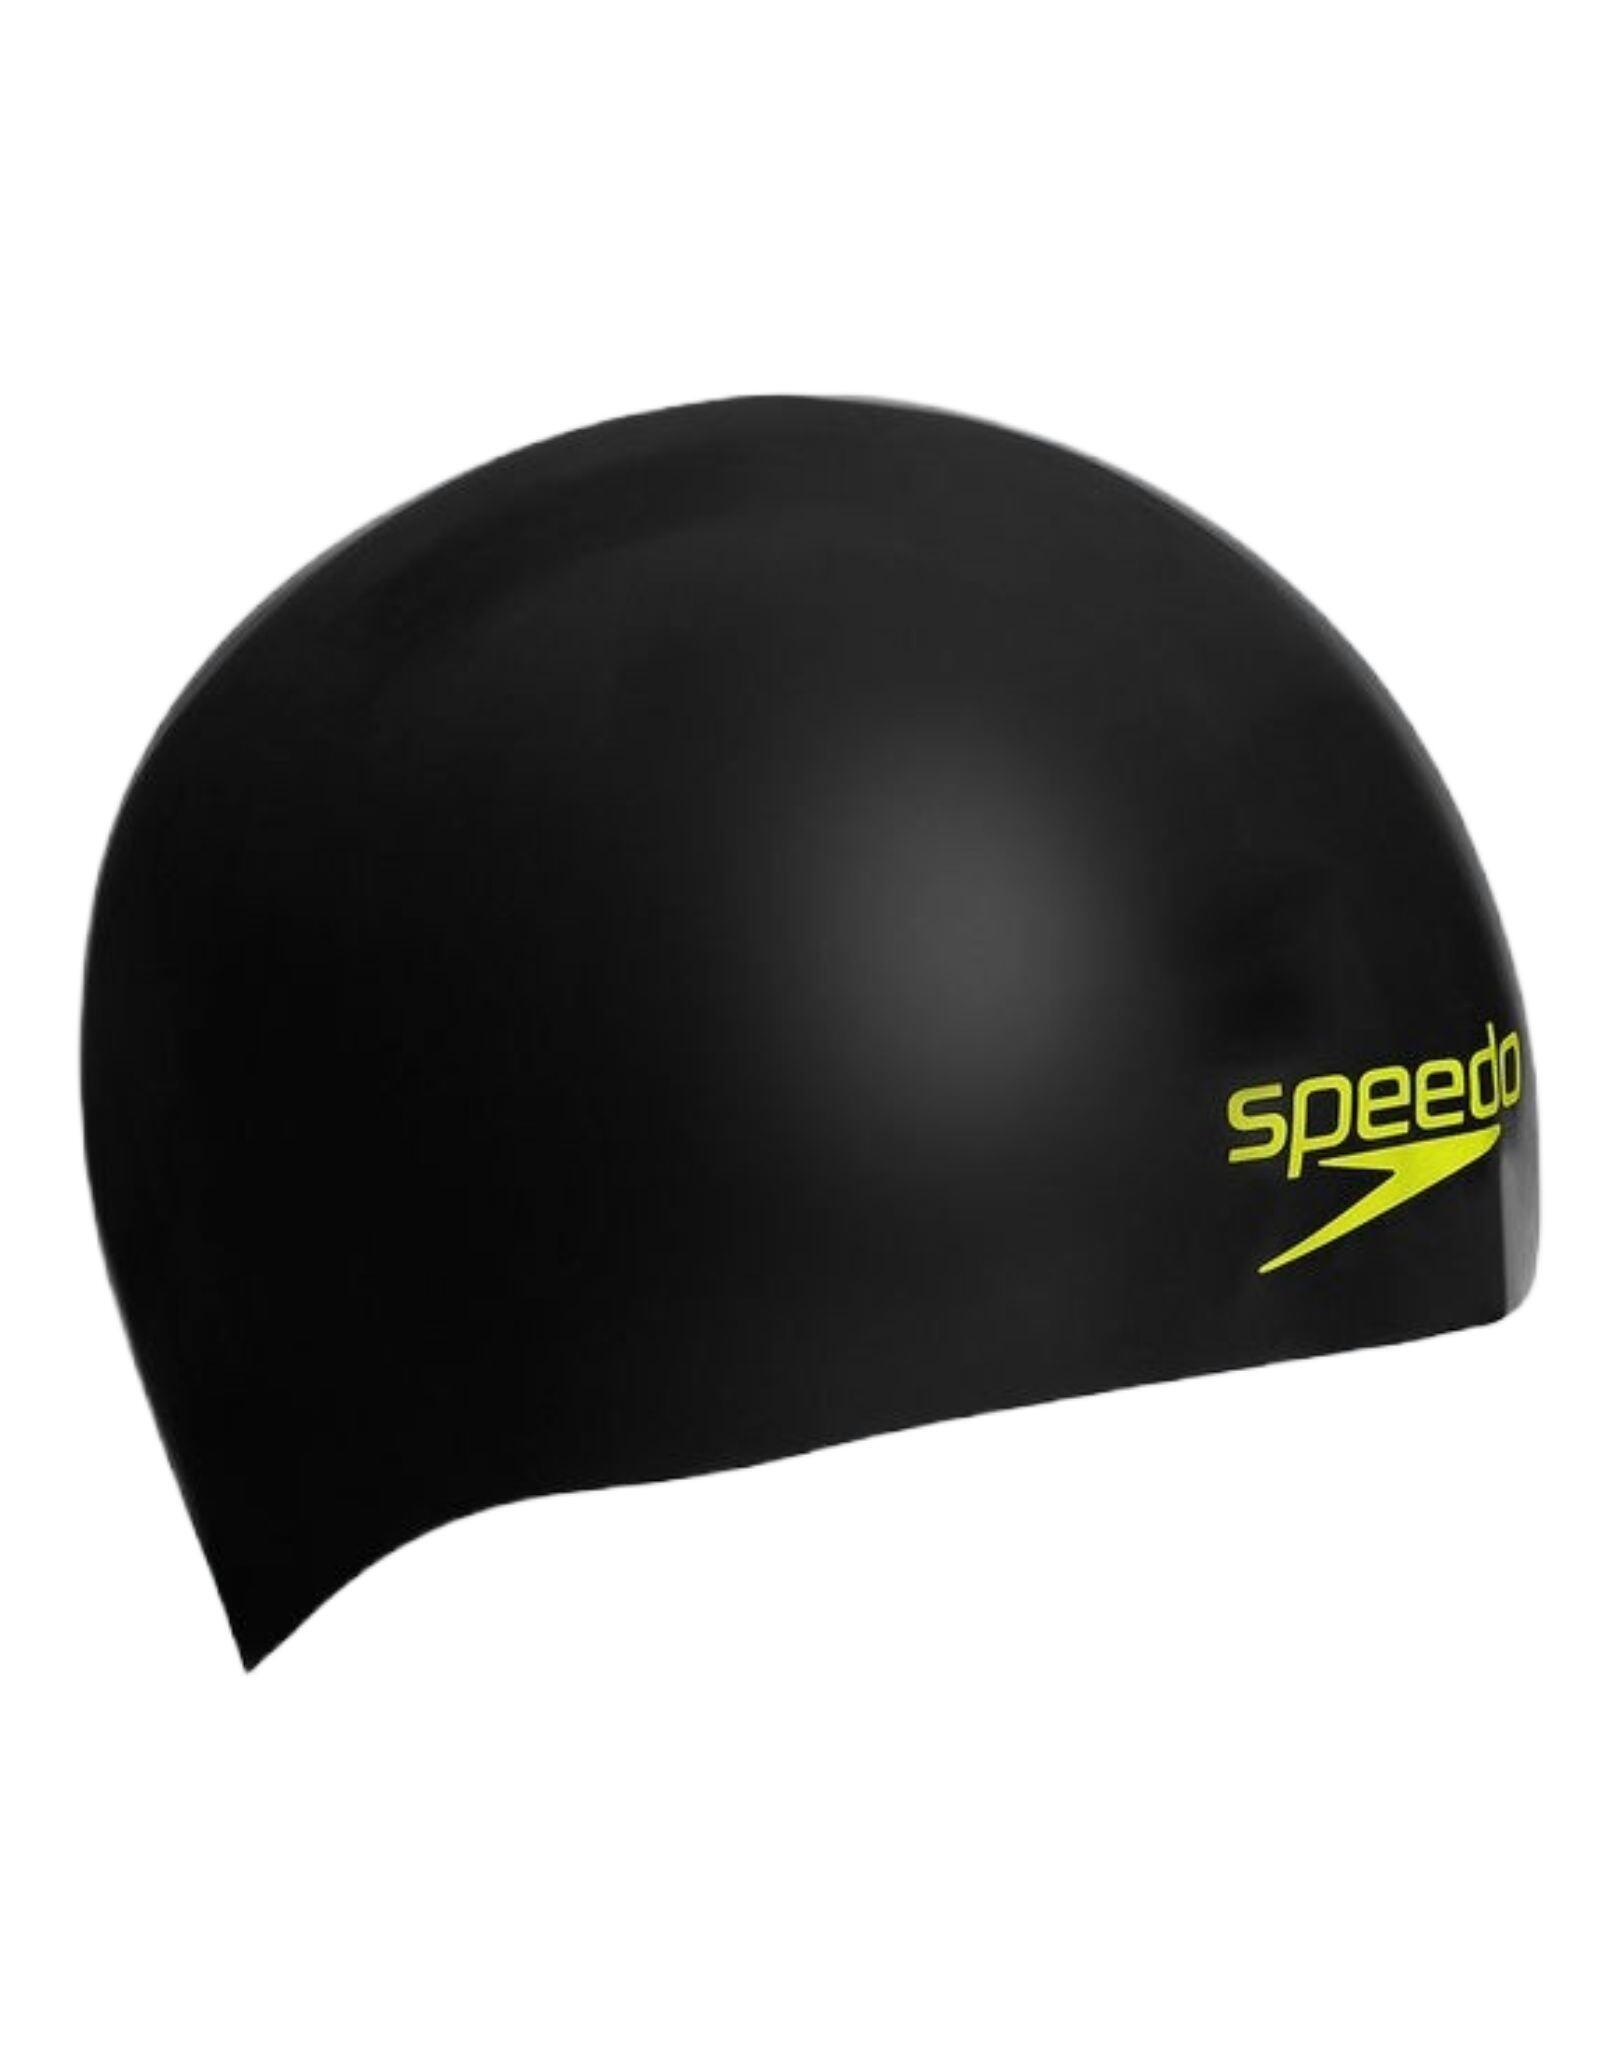 SPEEDO Speedo Fastskin Racing Cap - Black/Yellow